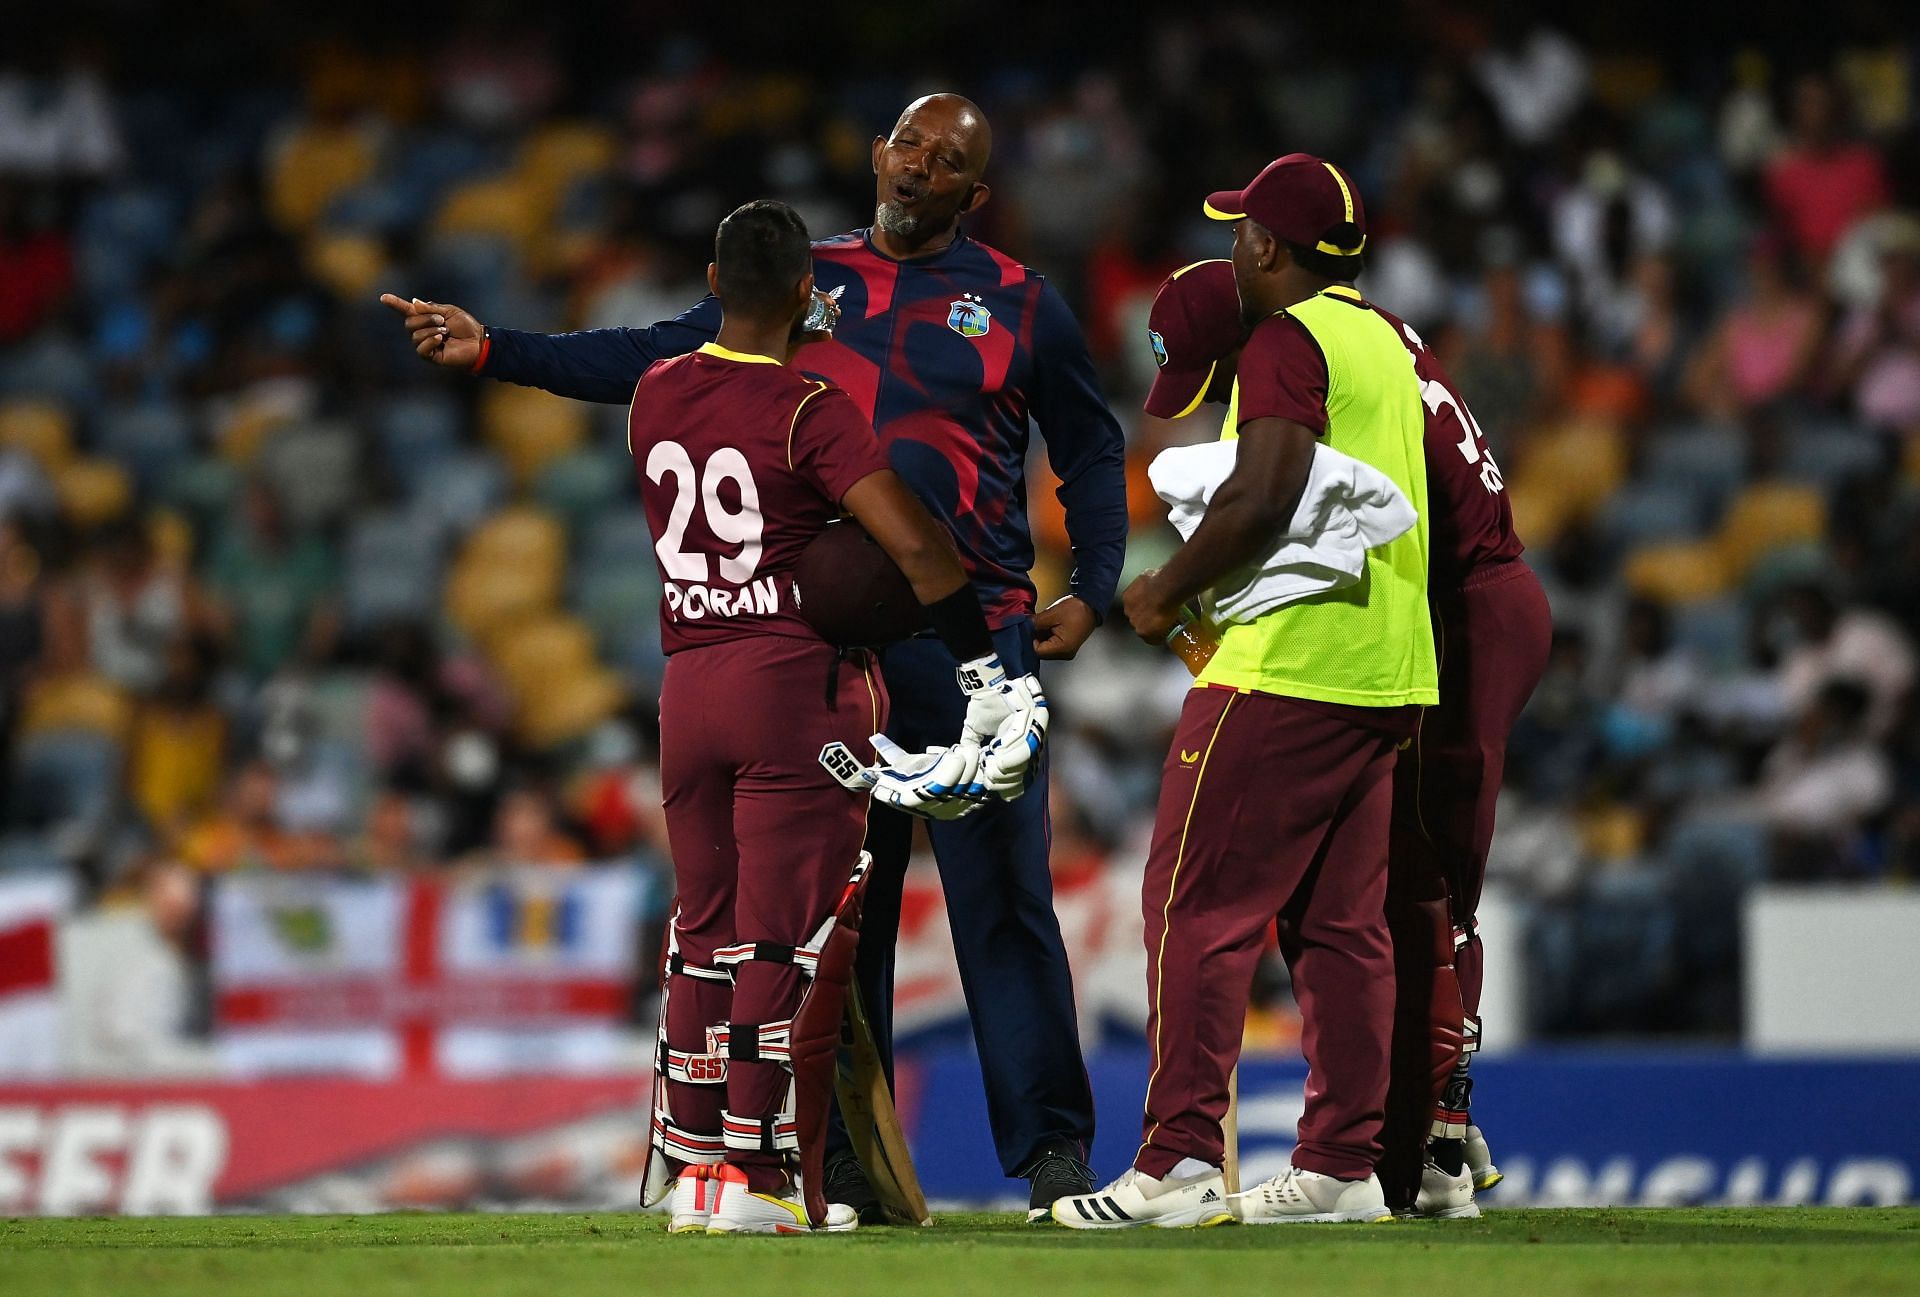 West Indies v England - T20 International Series Fourth T20I (Image courtesy: Getty)